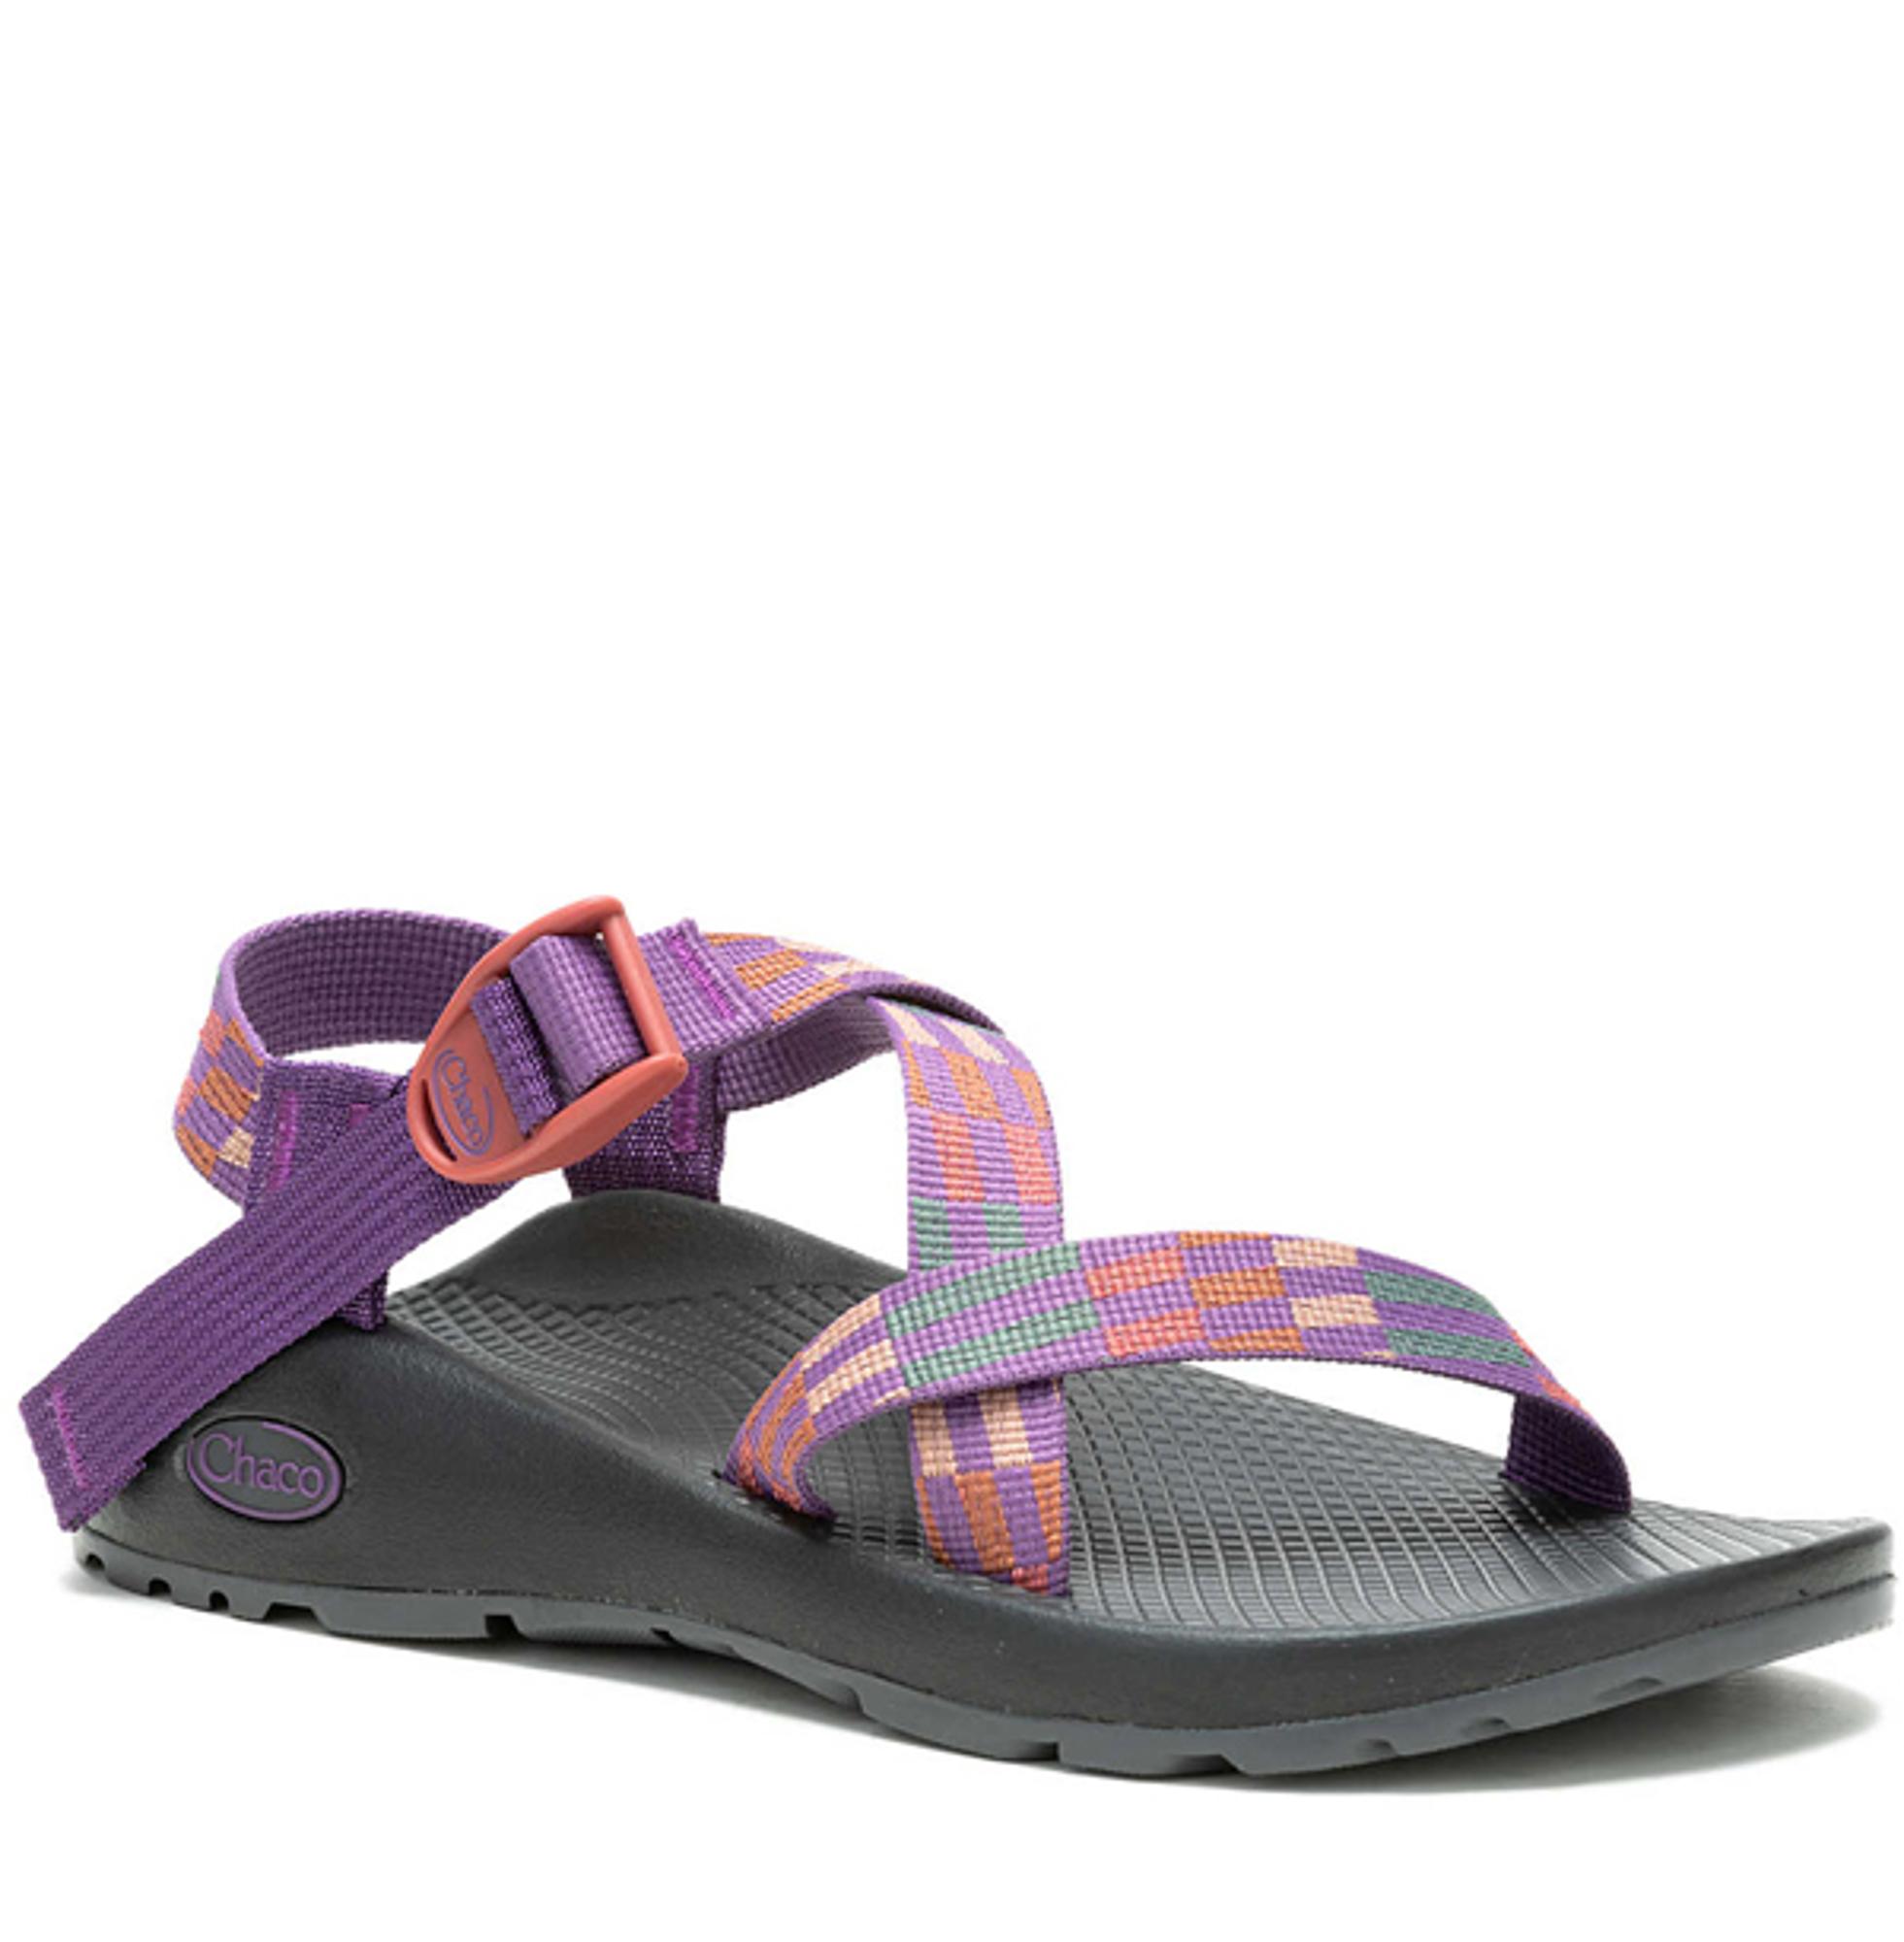 Womens Z/1 sandal / Deco purple 